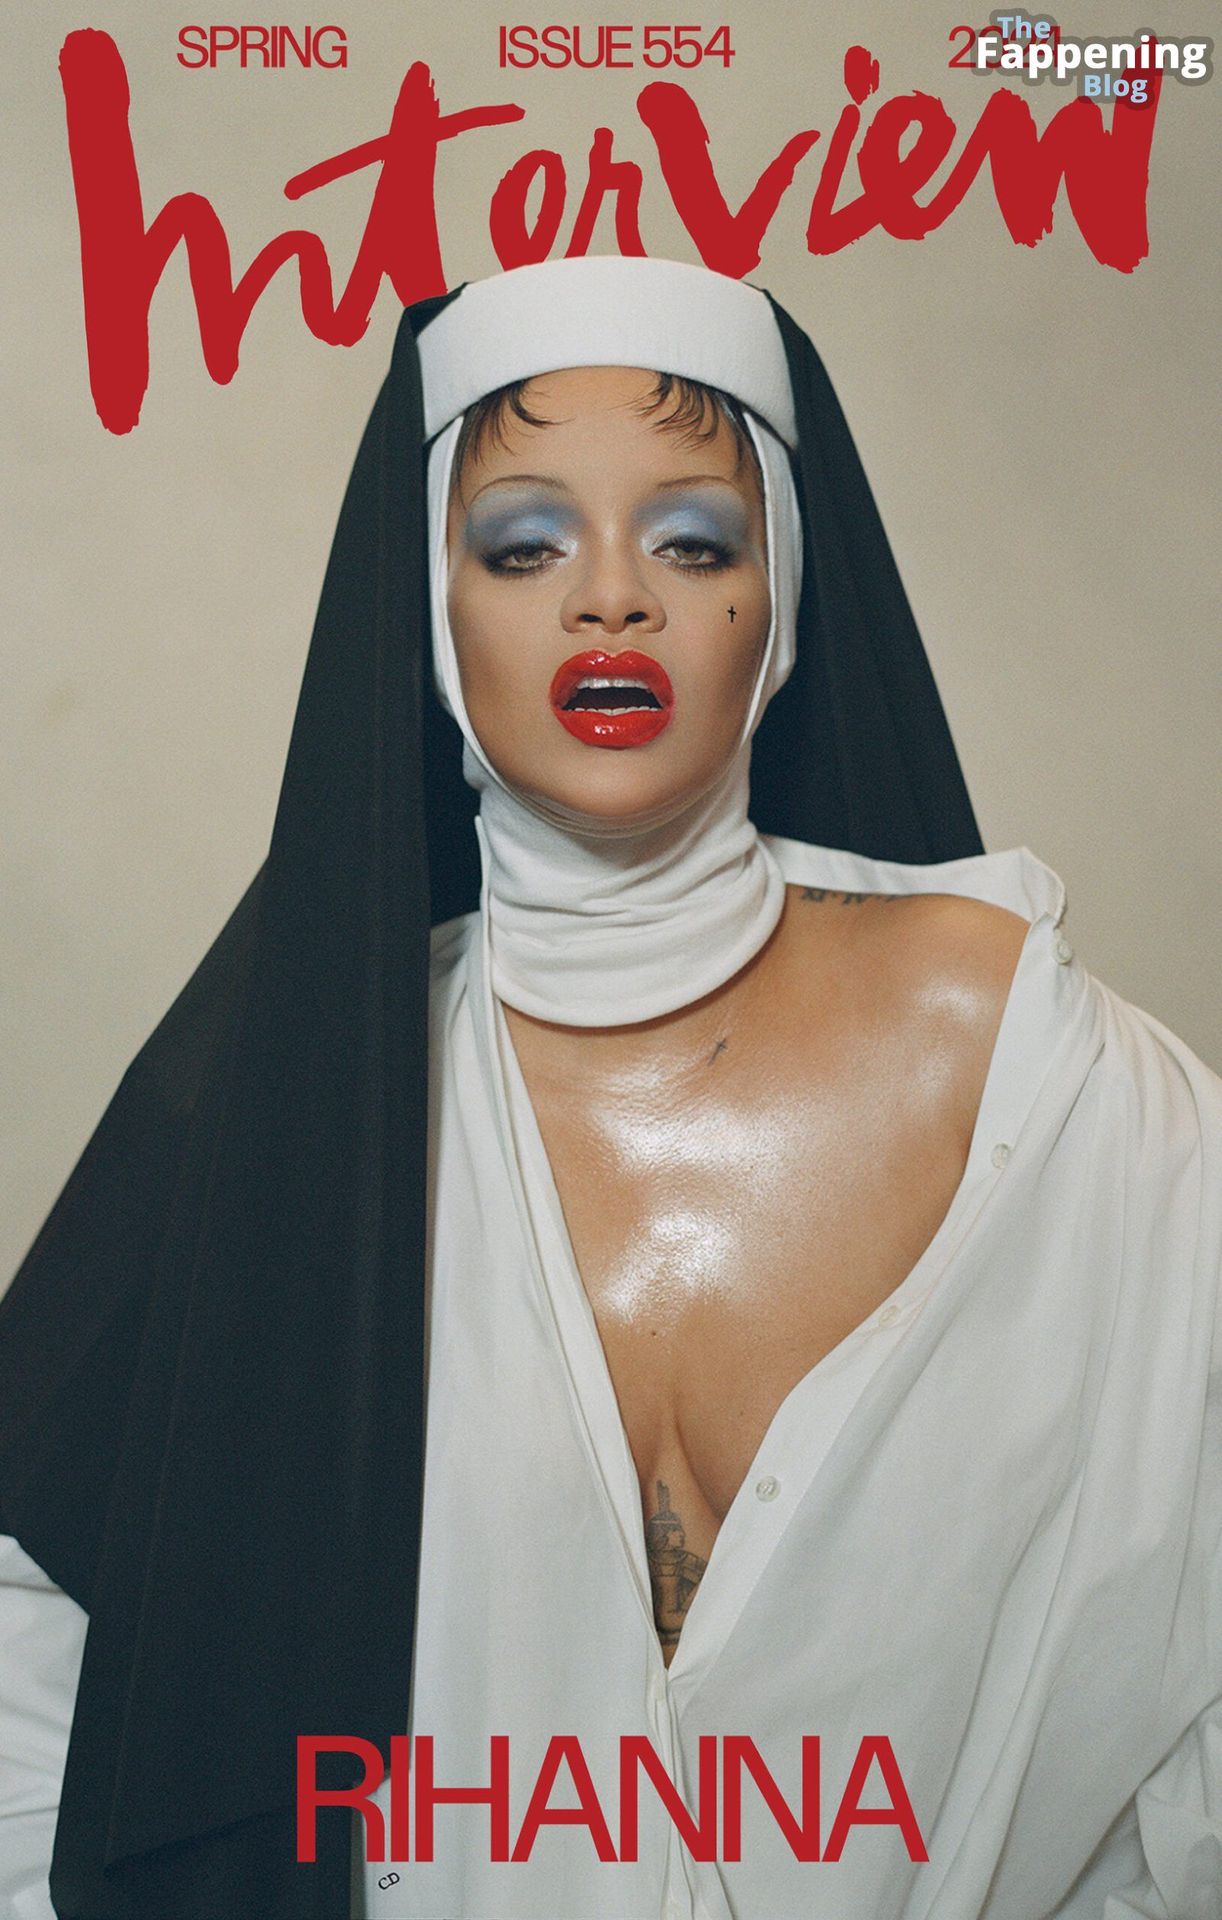 Rihanna-Scandalous-Topless-Photoshoot-9-thefappeningblog.com_.jpg